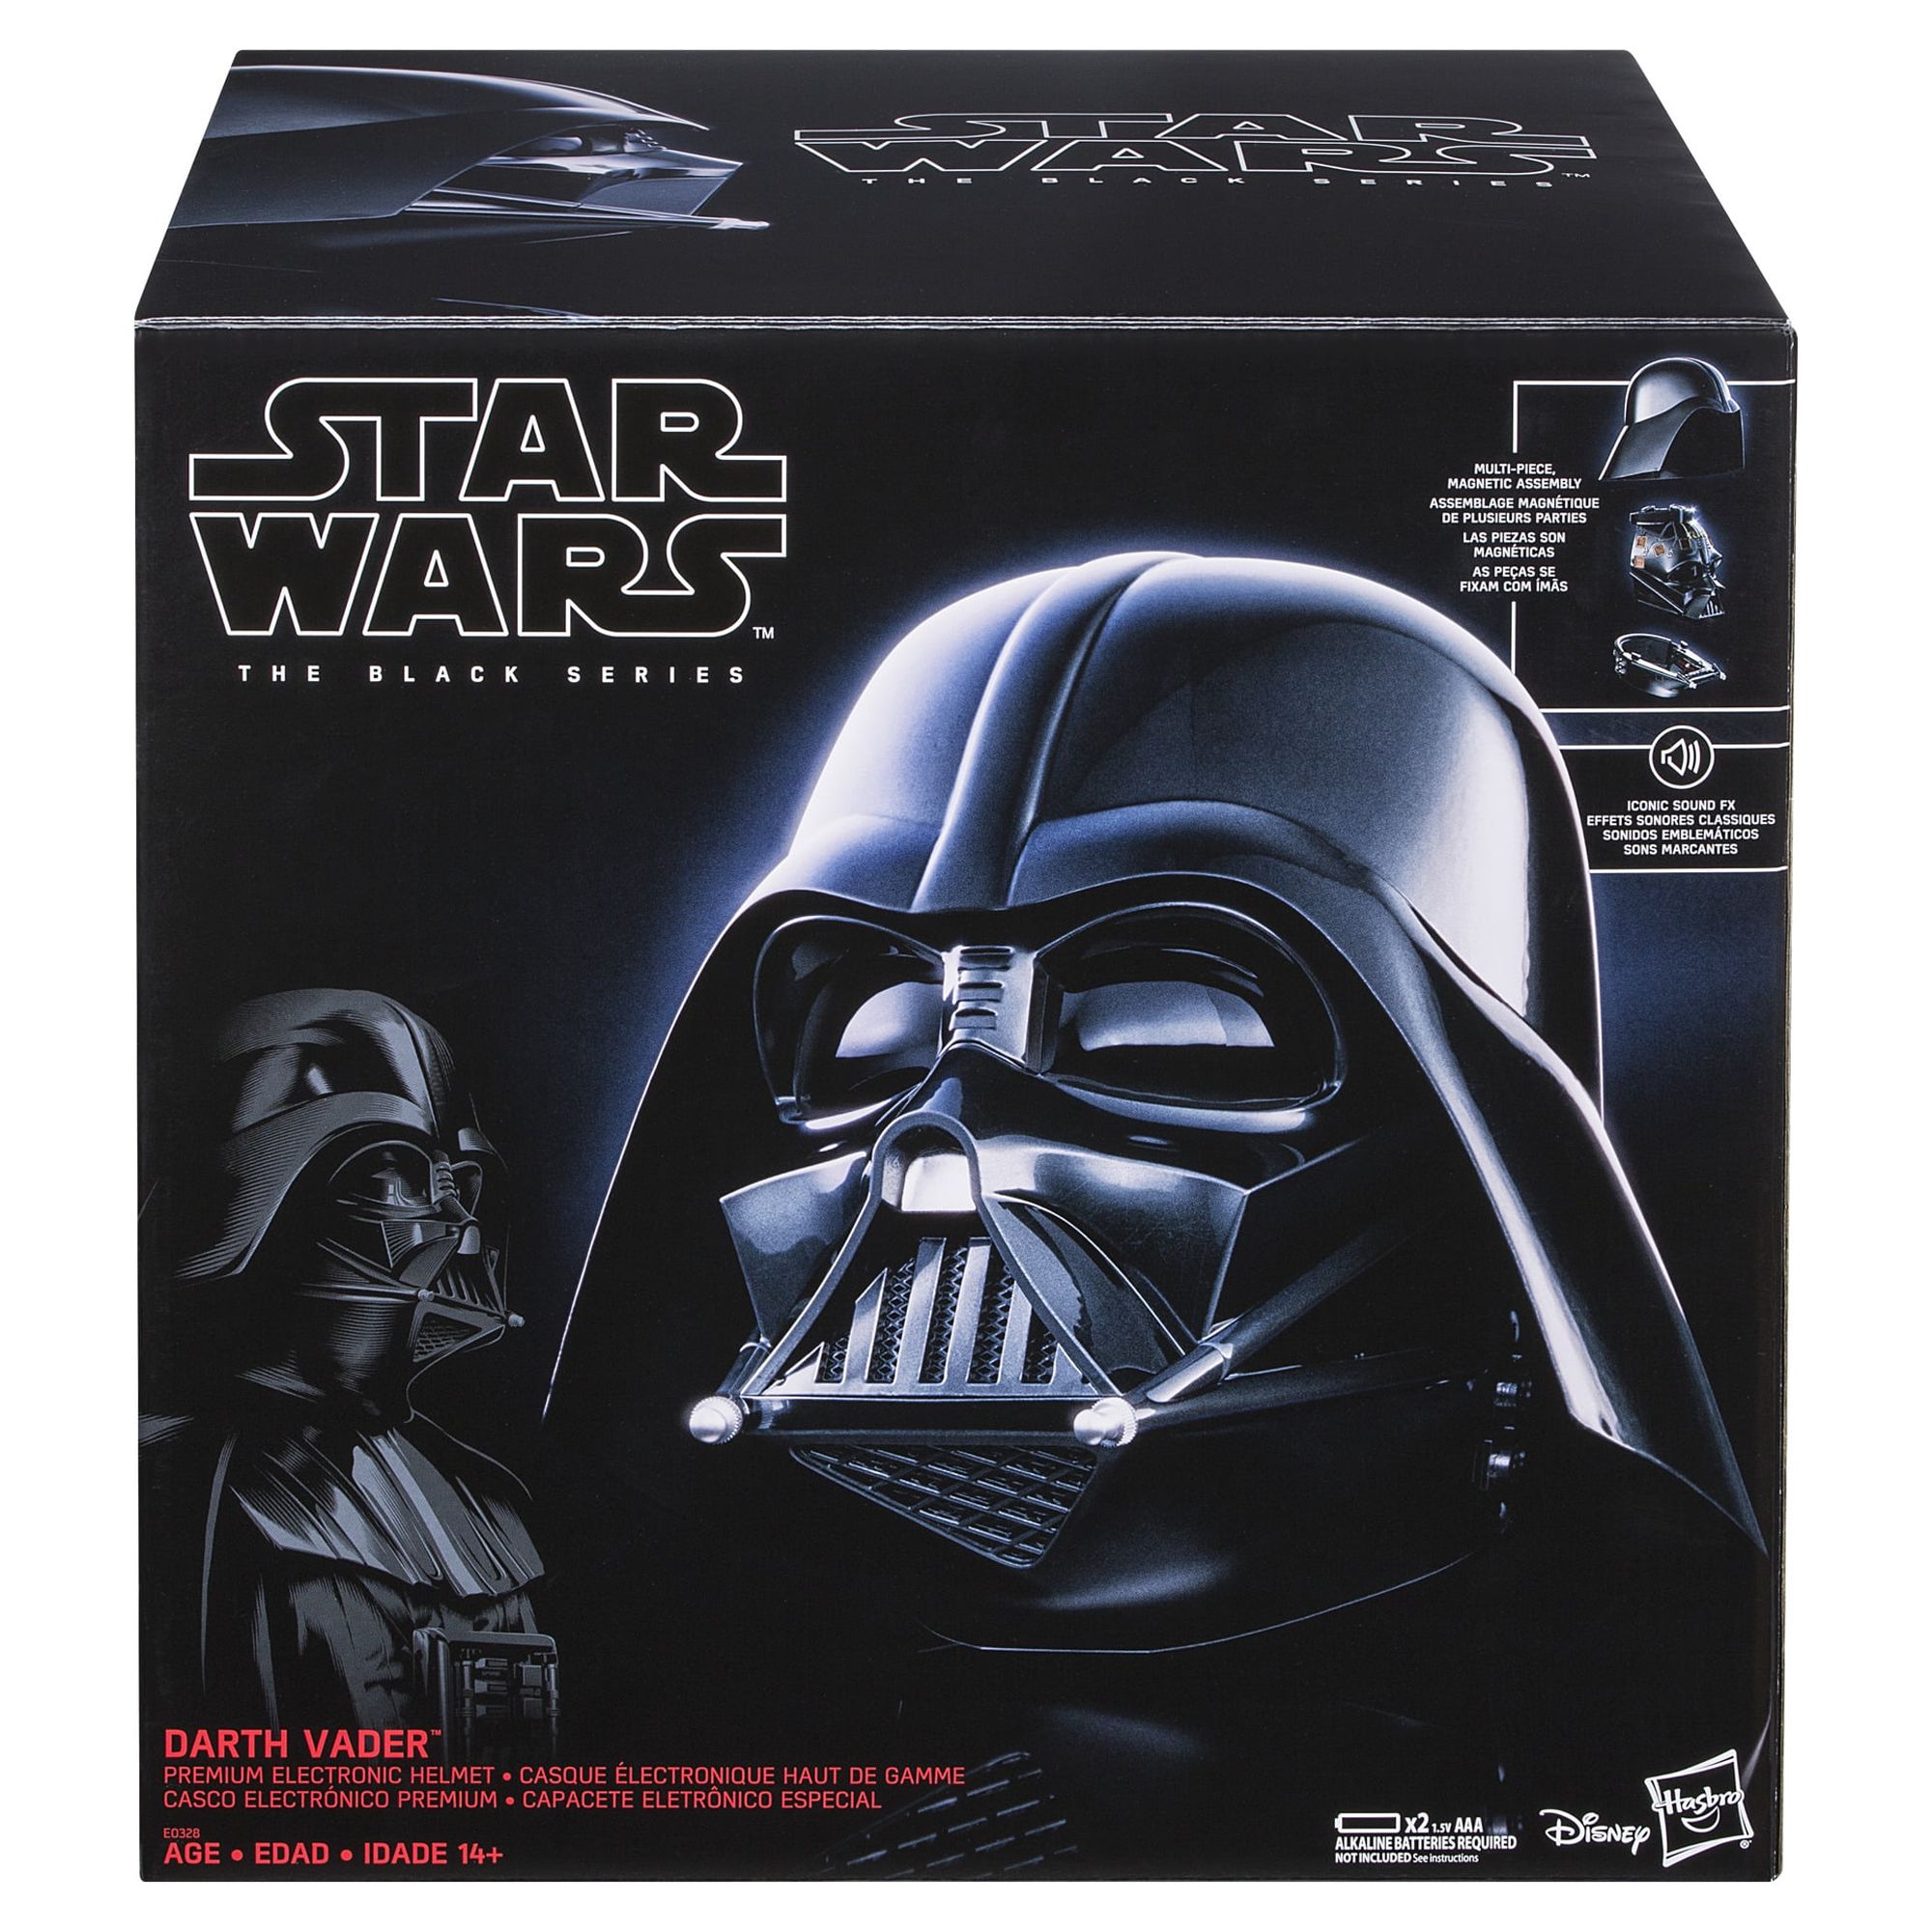 Star Wars The Black Series Darth Vader Premium Electronic Helmet - image 2 of 18